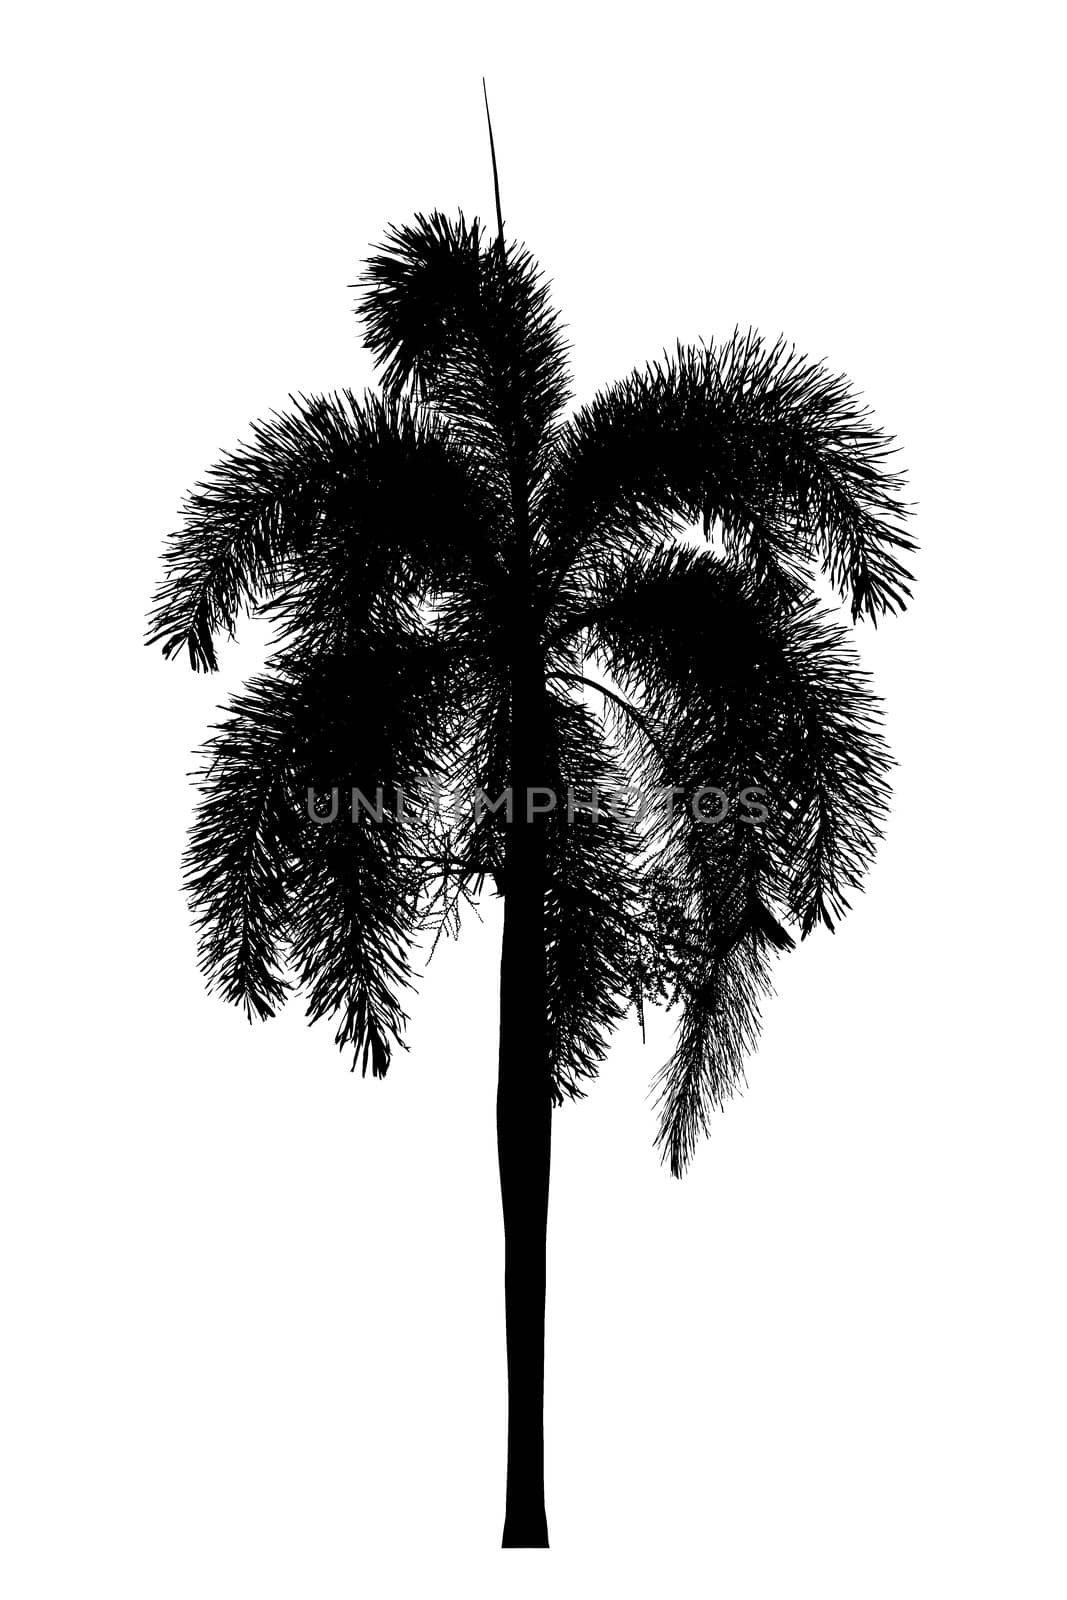 Palm tree silhouette Ornamental plants beautiful on white background